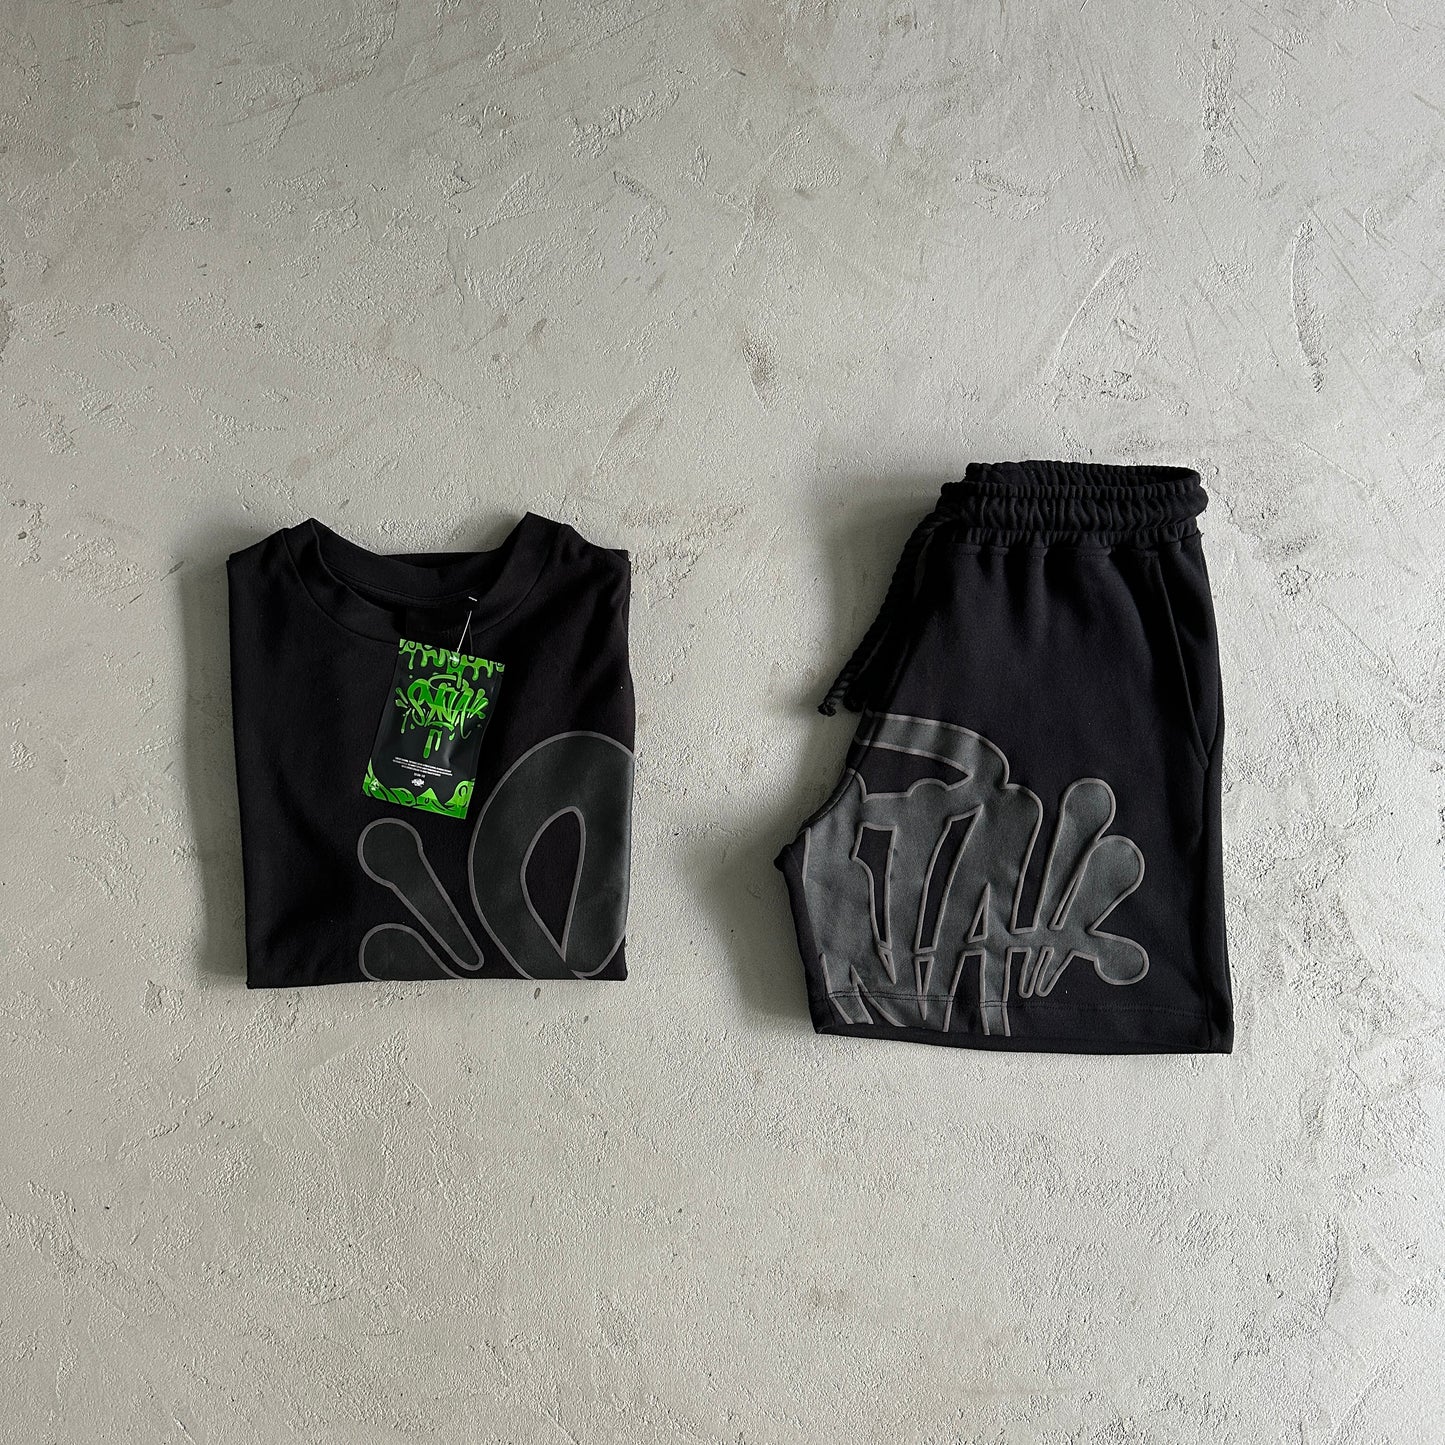 Syna Men's Black T-shirt SYNAWORLD T-SHIRT & SHORTS LOGO SET